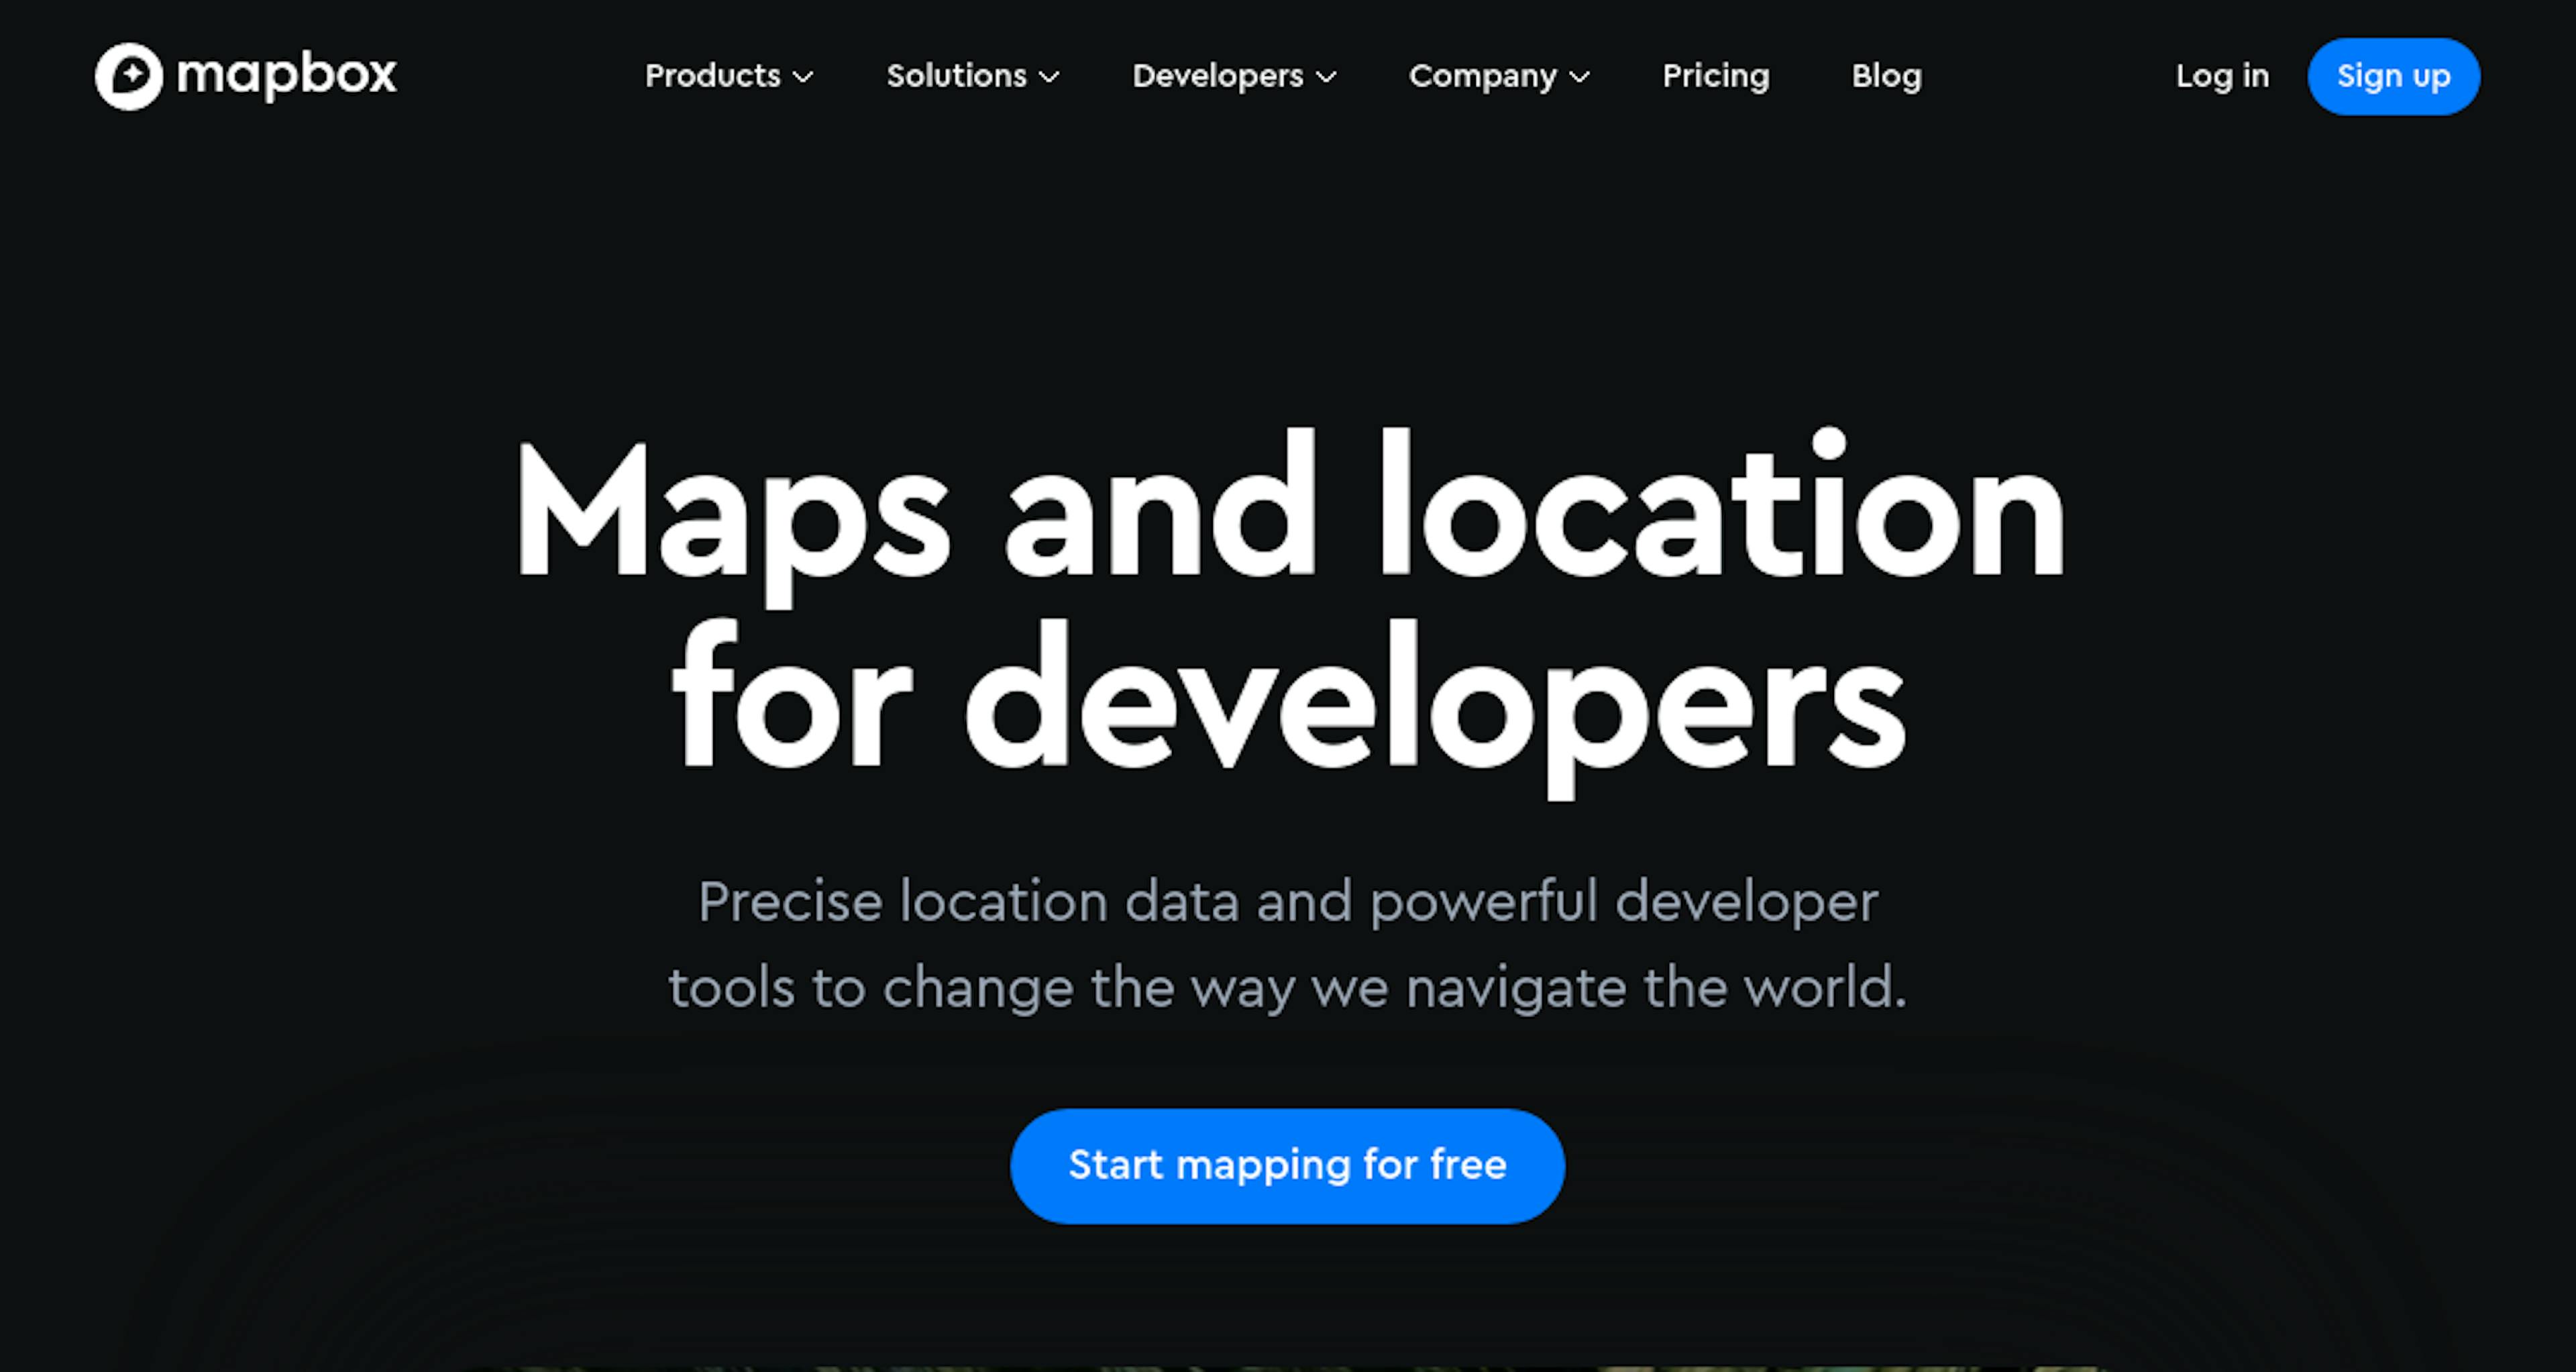 Mapbox - Home page